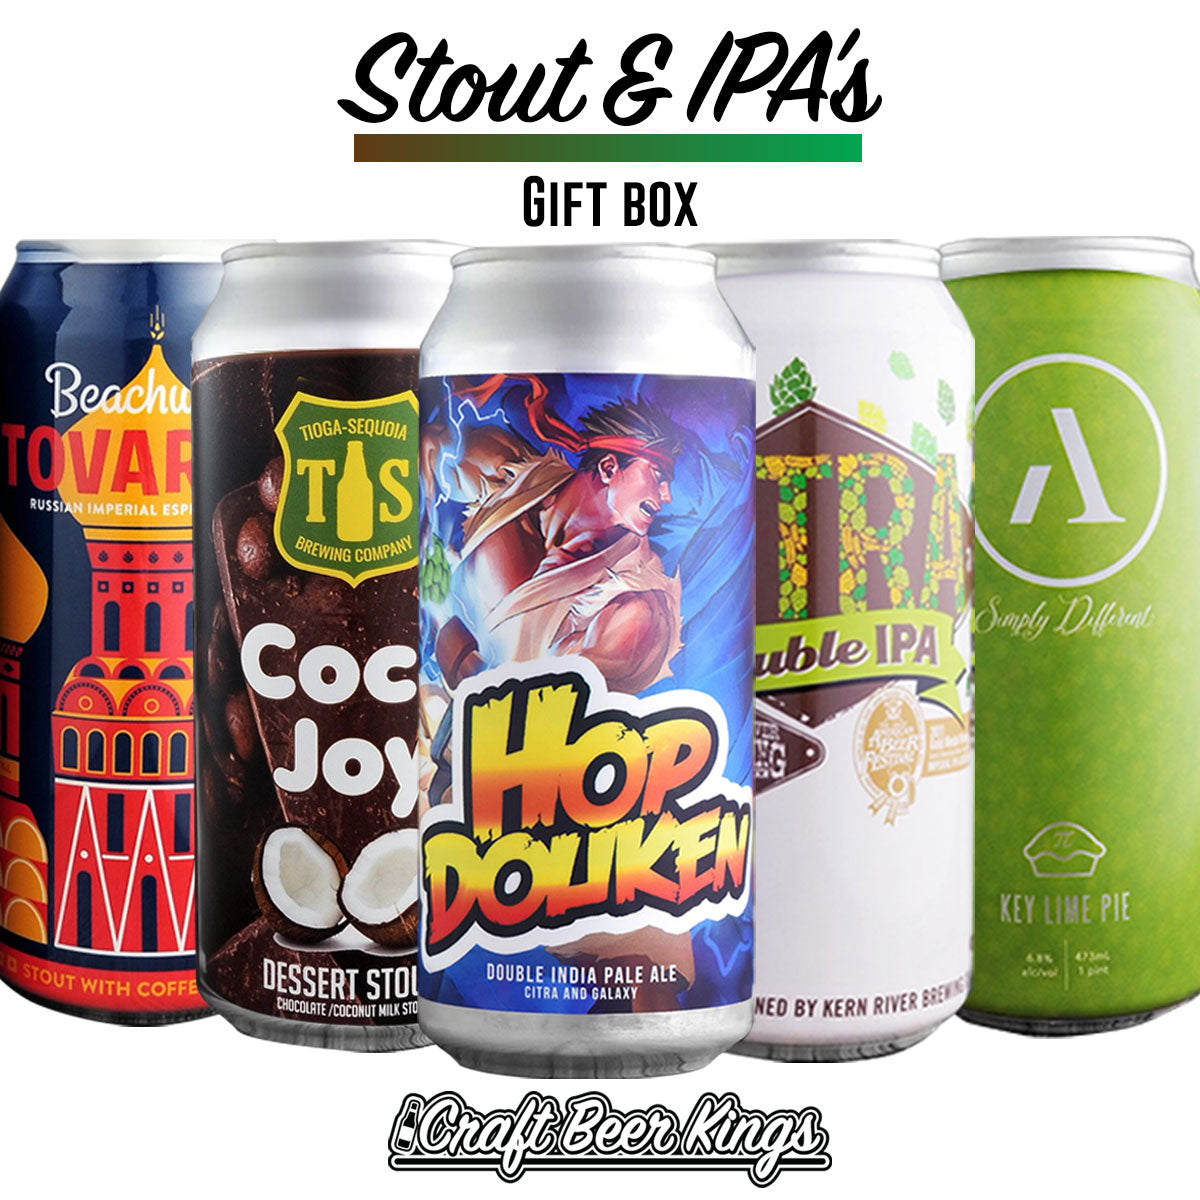 Stout and IPA Gift Box - Free shipping!